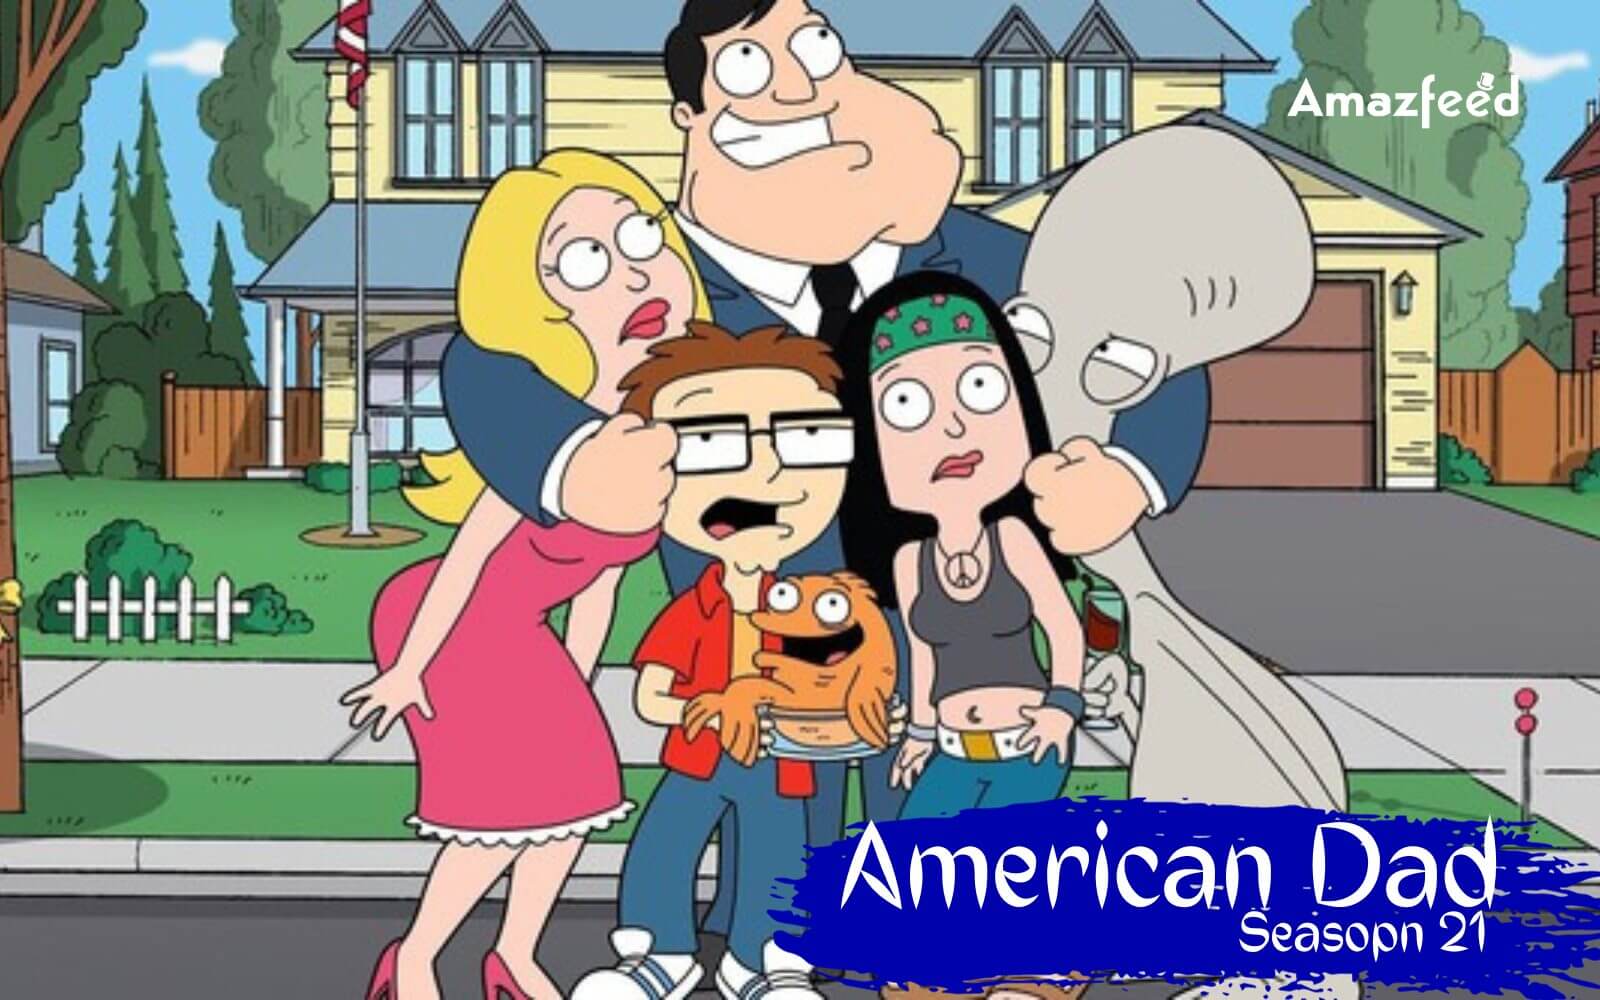 American Dad Season 21 Release Date, Spoilers, Plot, Trailer